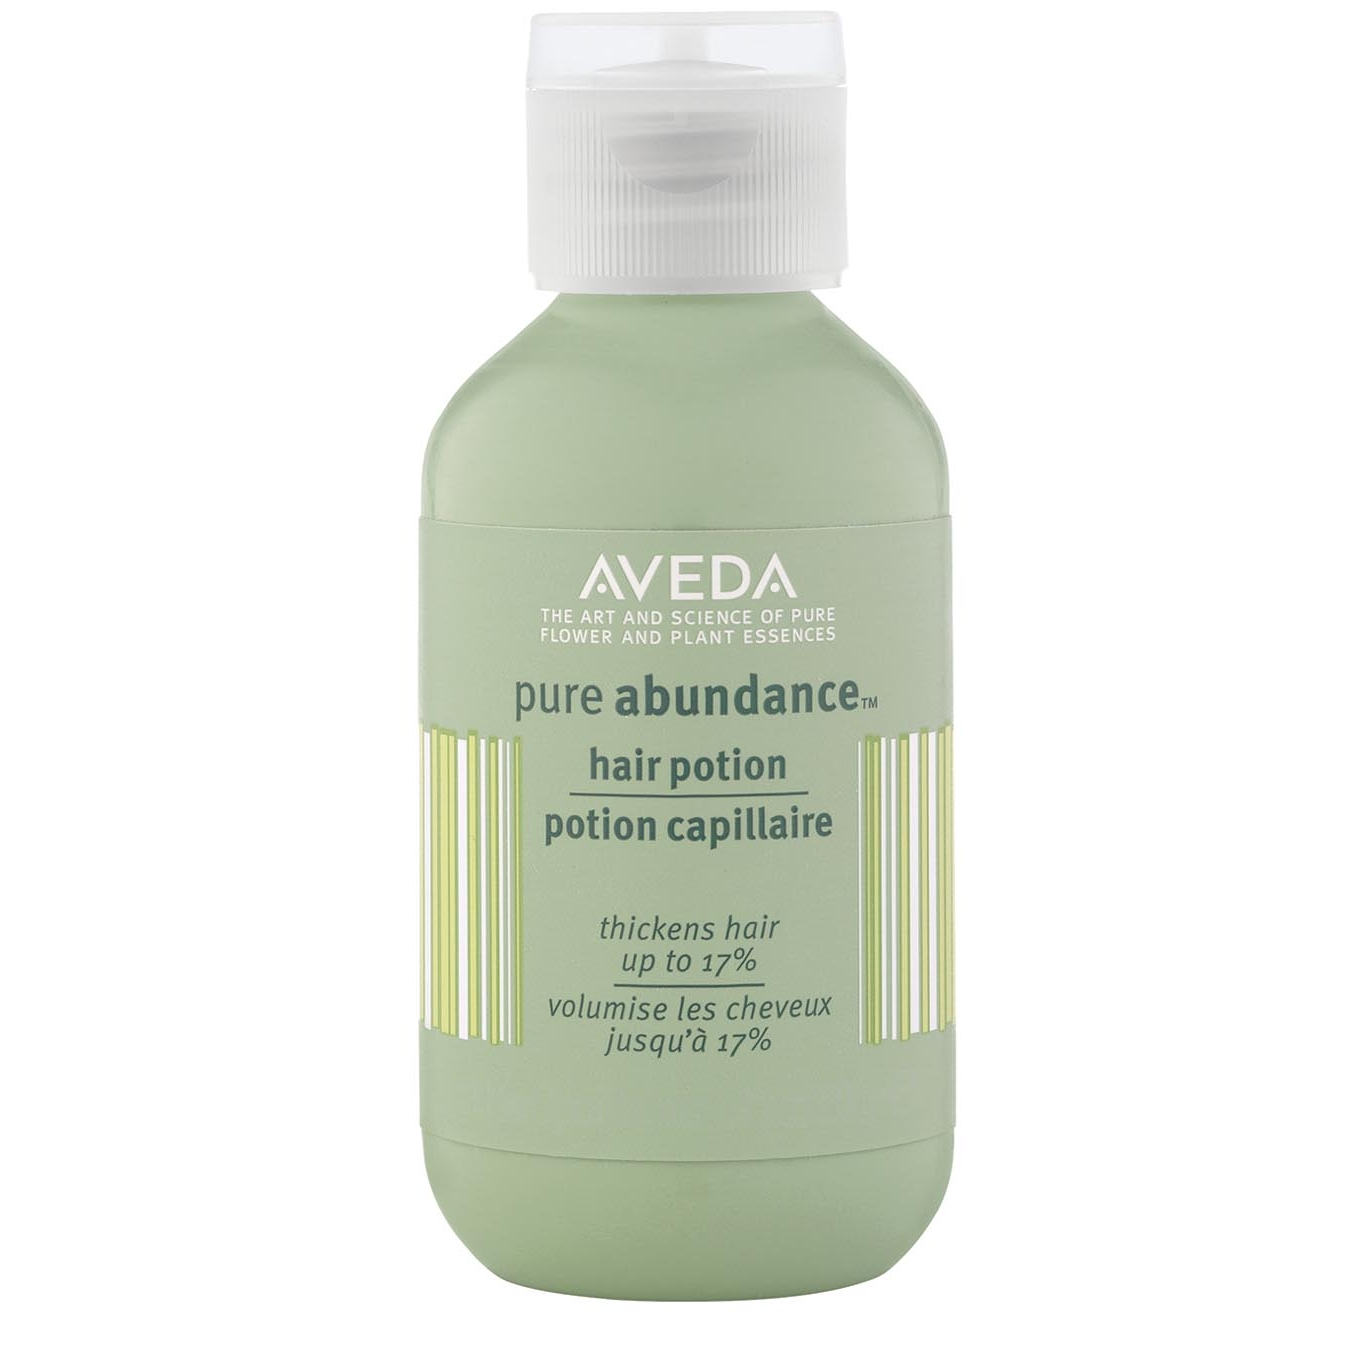 Pure Abundance Hair Potion 20g, Hair Potion, Thickening, Volume